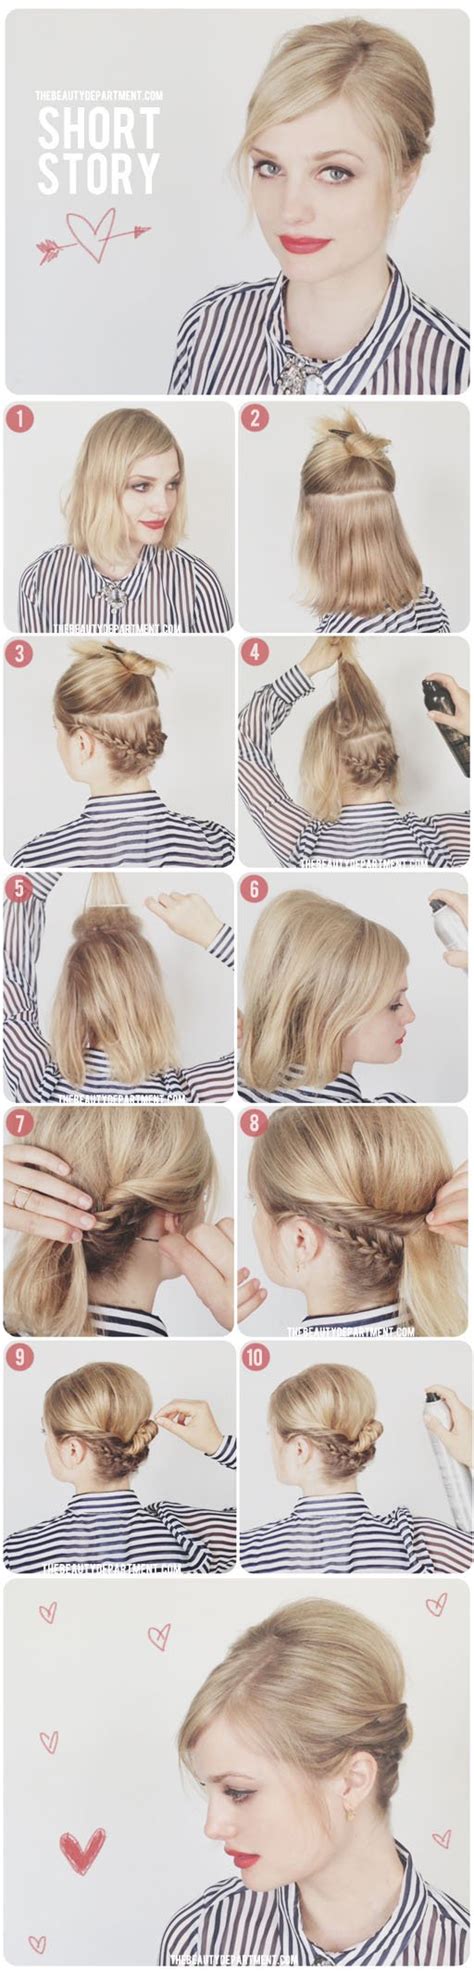 simple  stylish hairstyle tutorials  work pretty designs